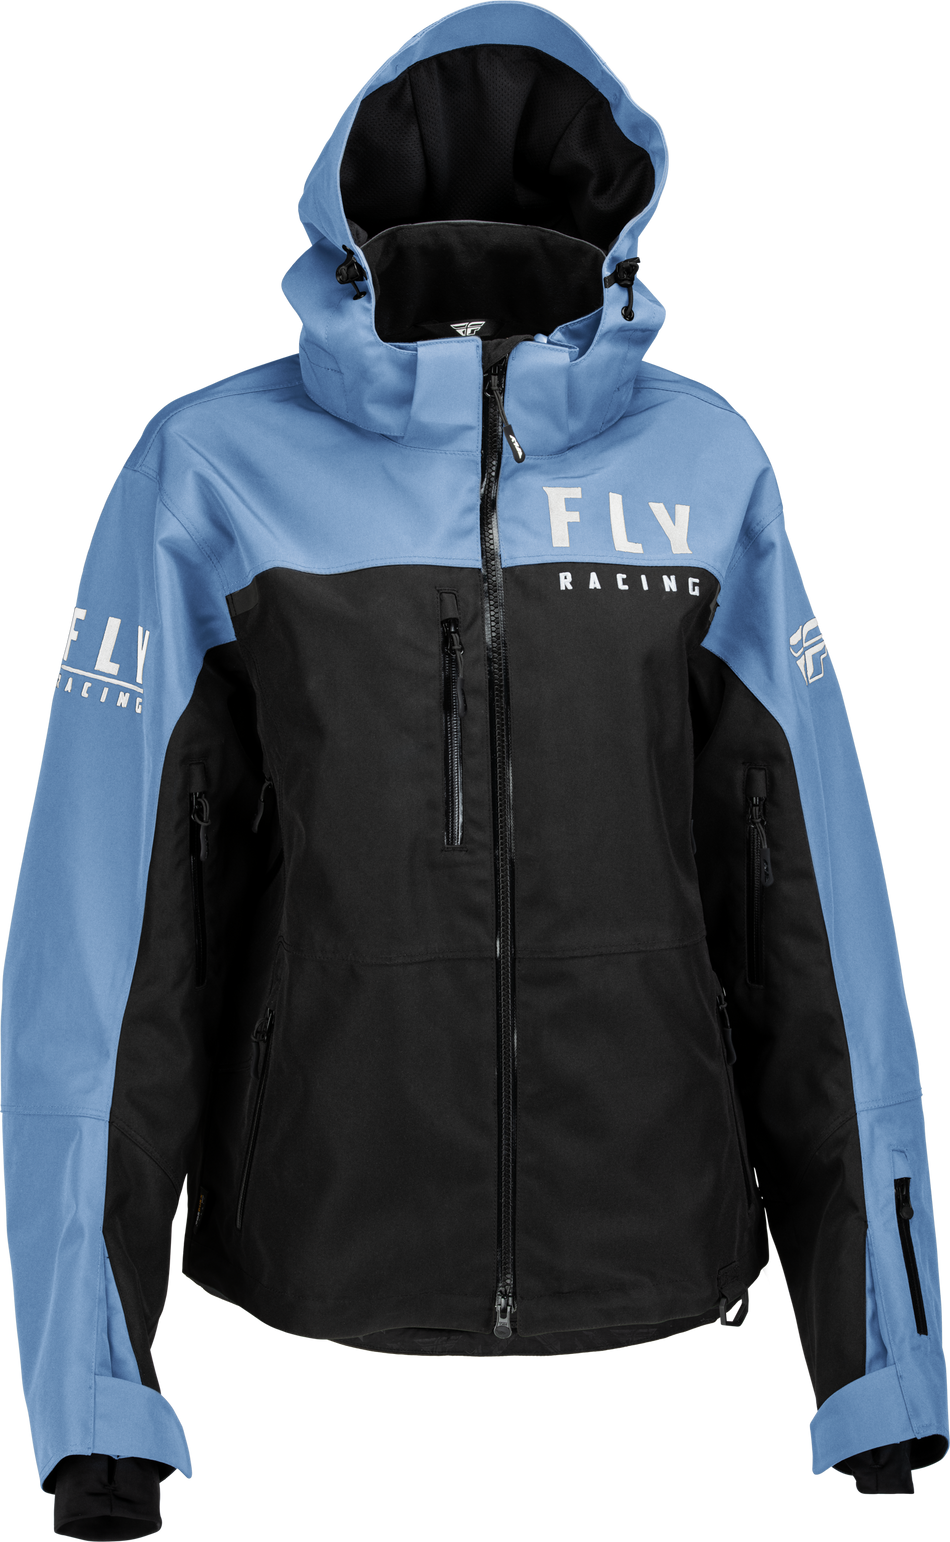 FLY RACING Women's Carbon Jacket Black/Blue 2x 470-45012X